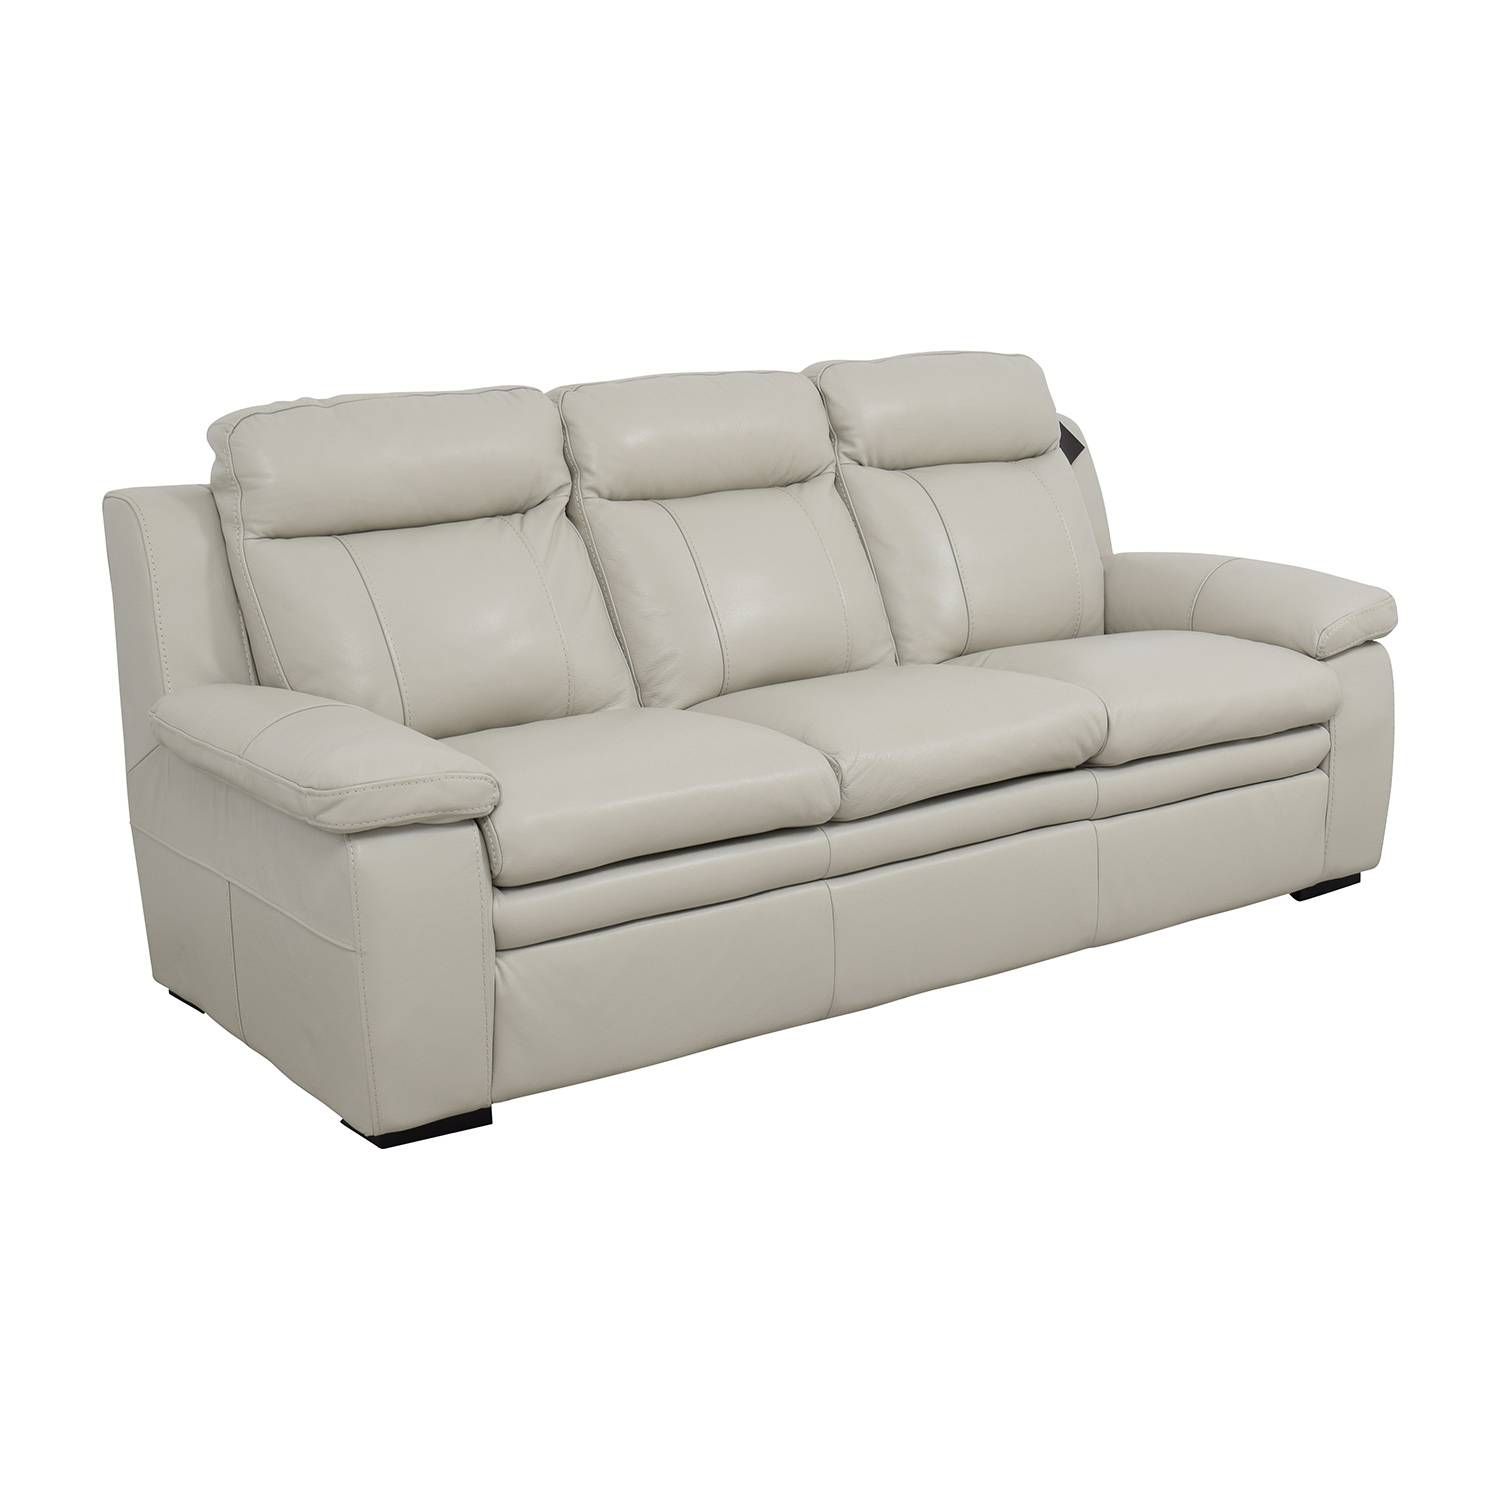 67% Off – Macy's Macy's Zane White Leather Sofa / Sofas Pertaining To Macys Sofas (View 14 of 25)